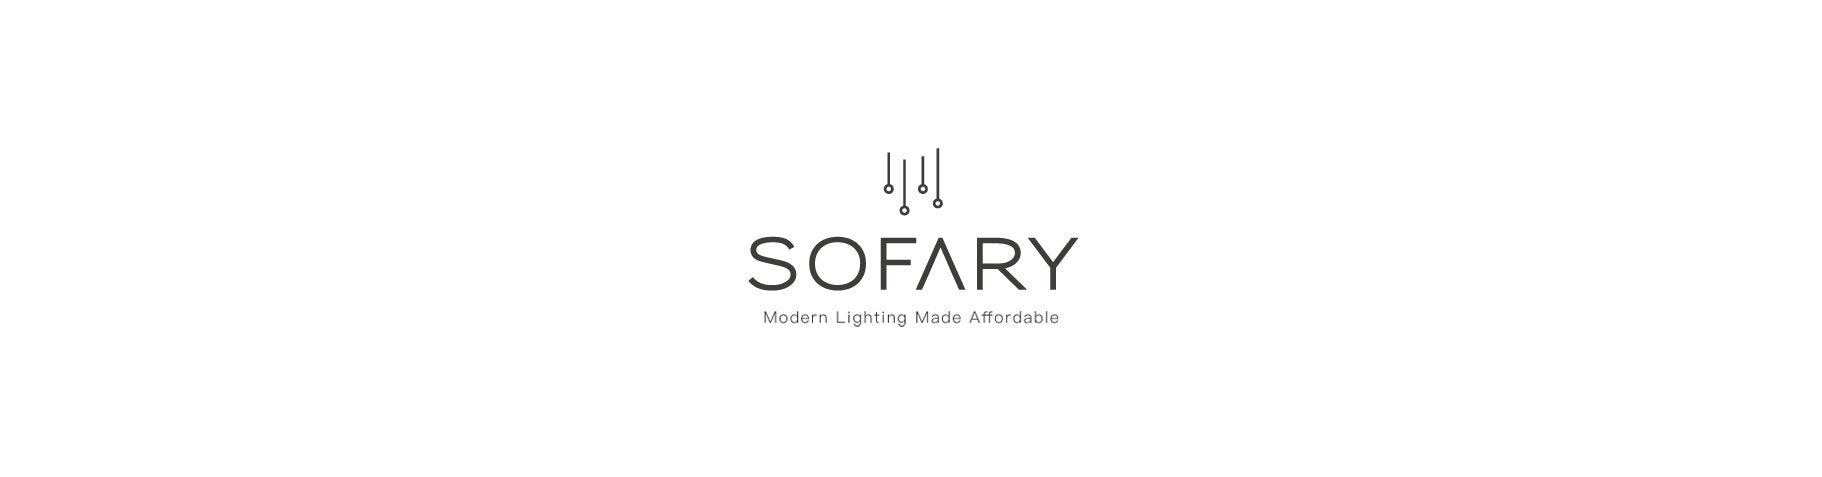 Sofary lighting